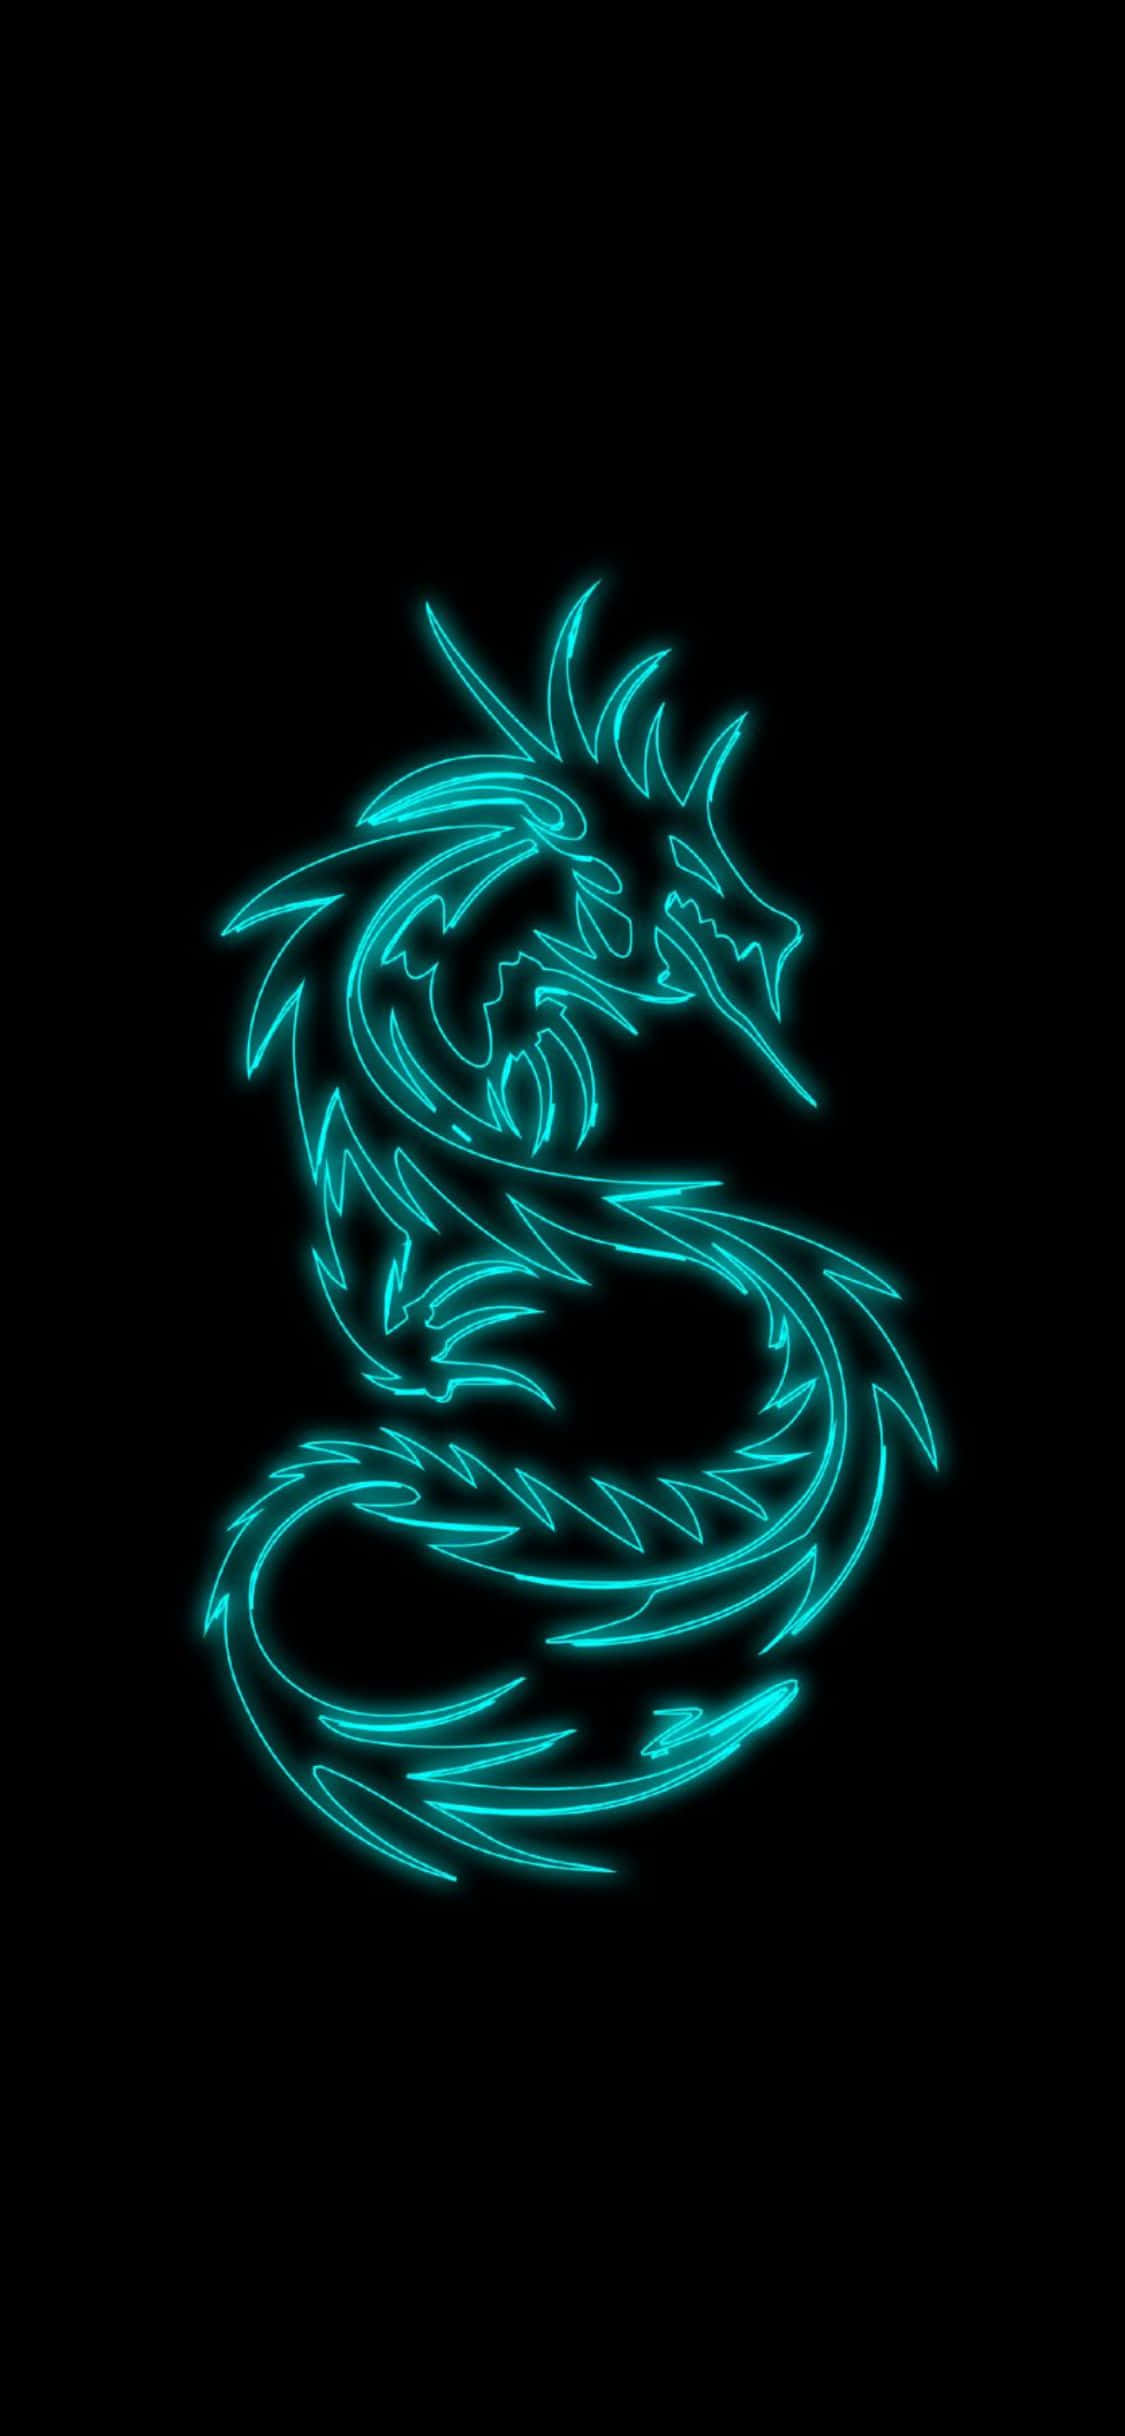 A Blue Dragon On A Black Background